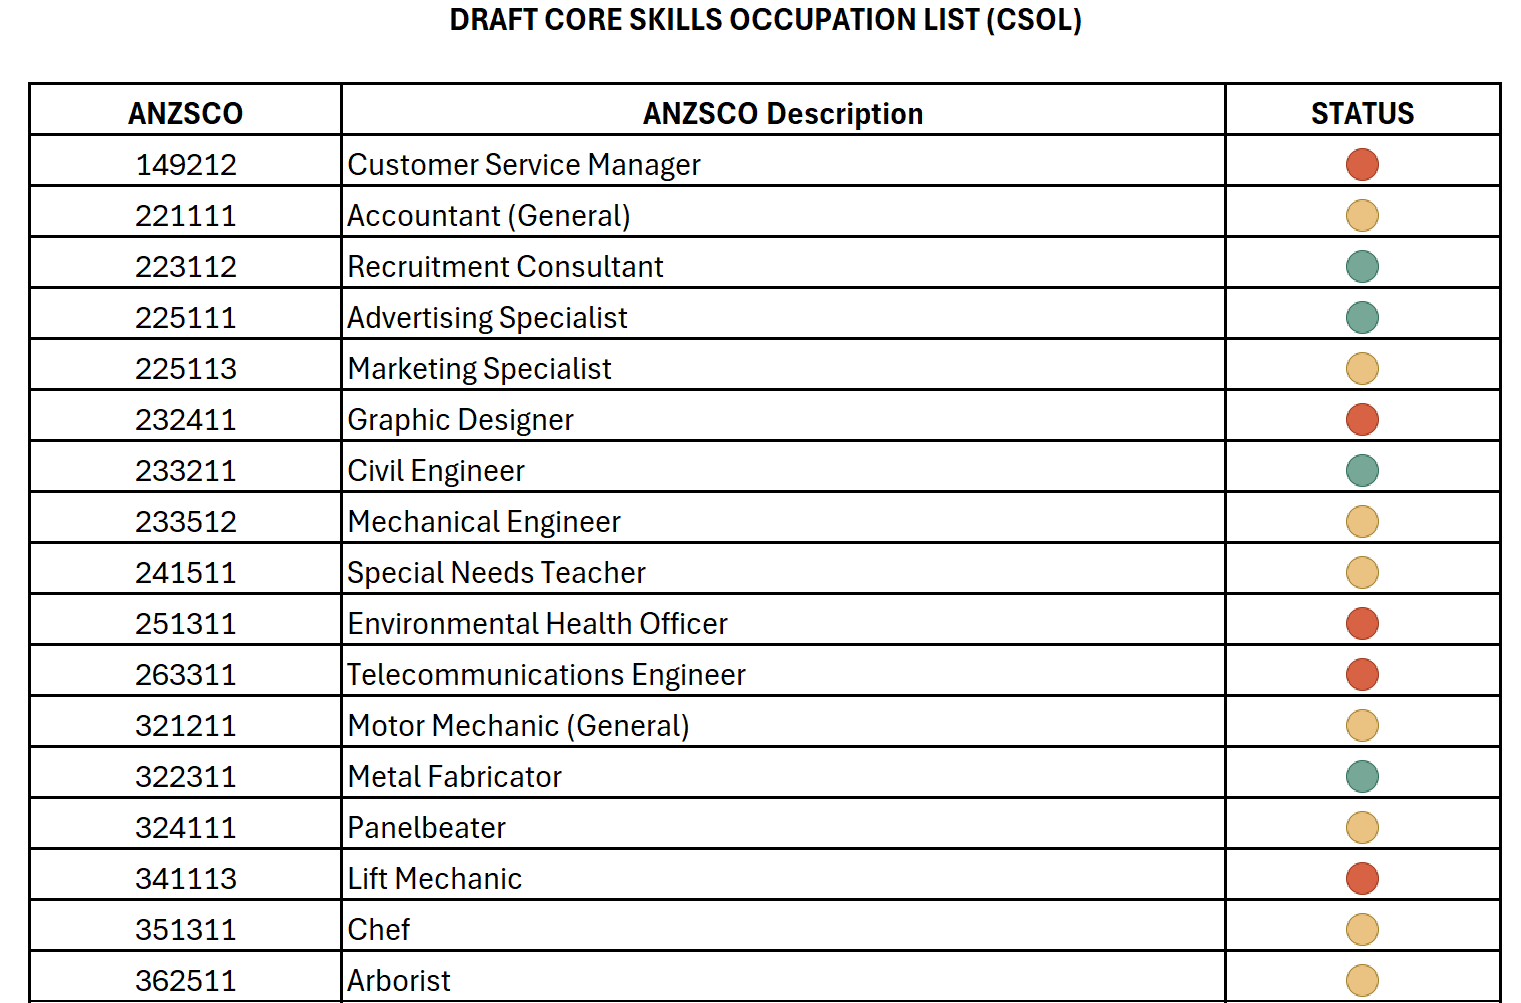 Jobs & Skills Australia announce Draft new Core Skills List